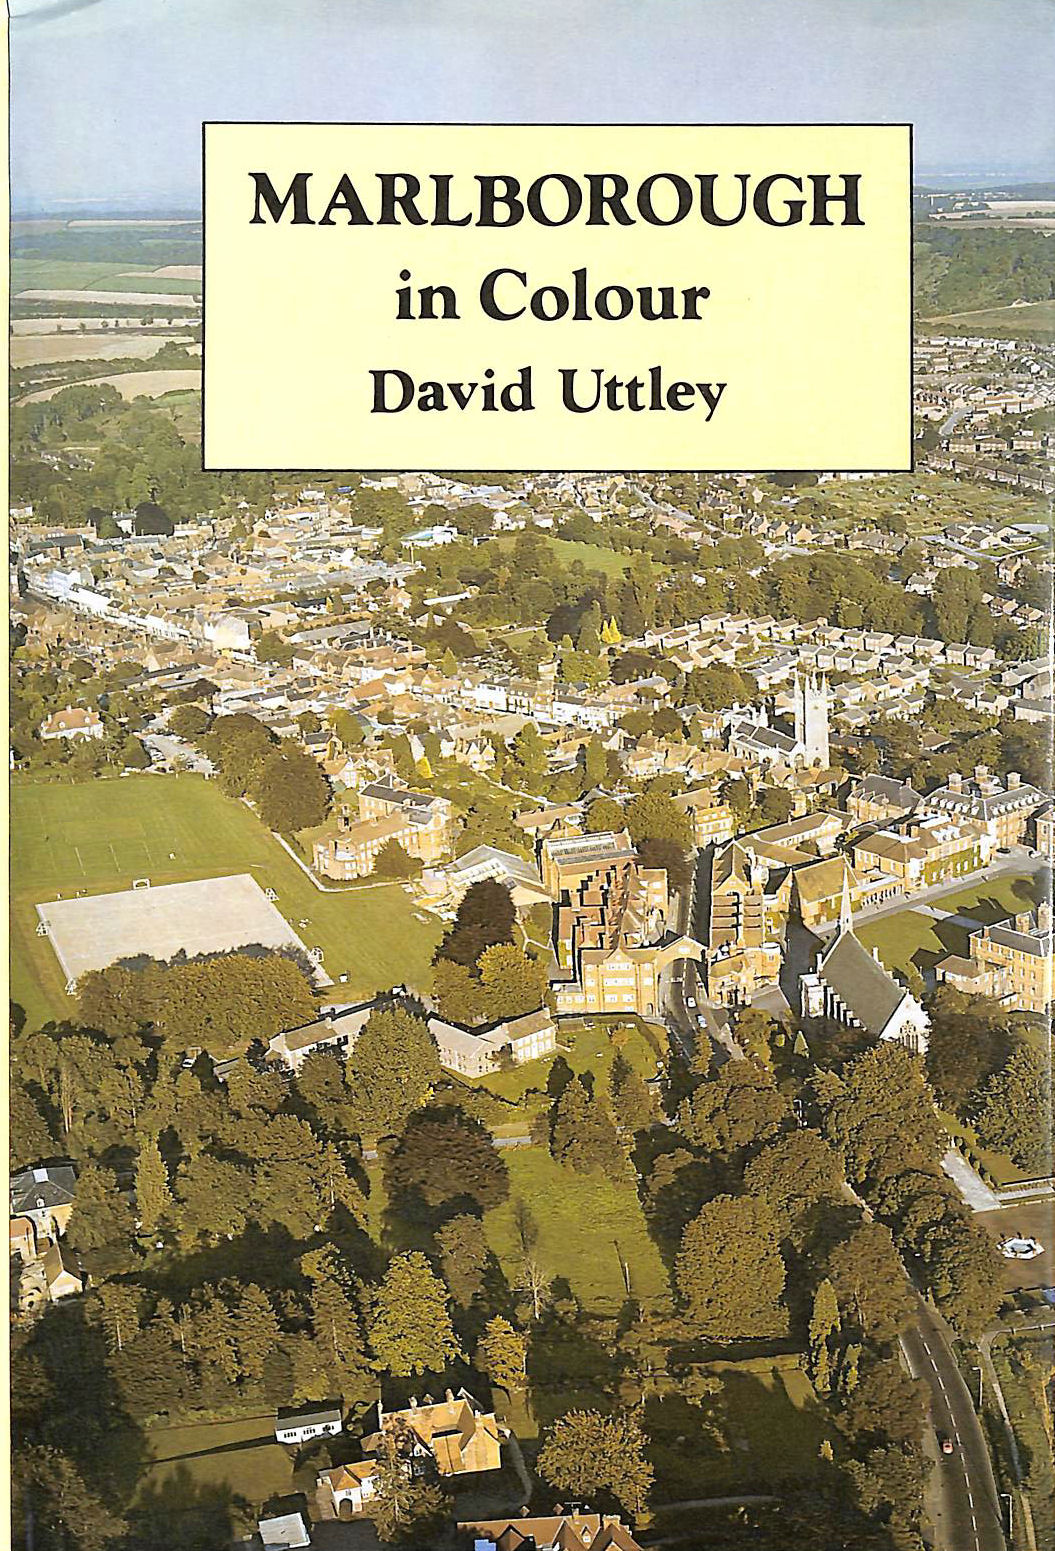 UTTLEY, DAVID - Marlborough in Colour